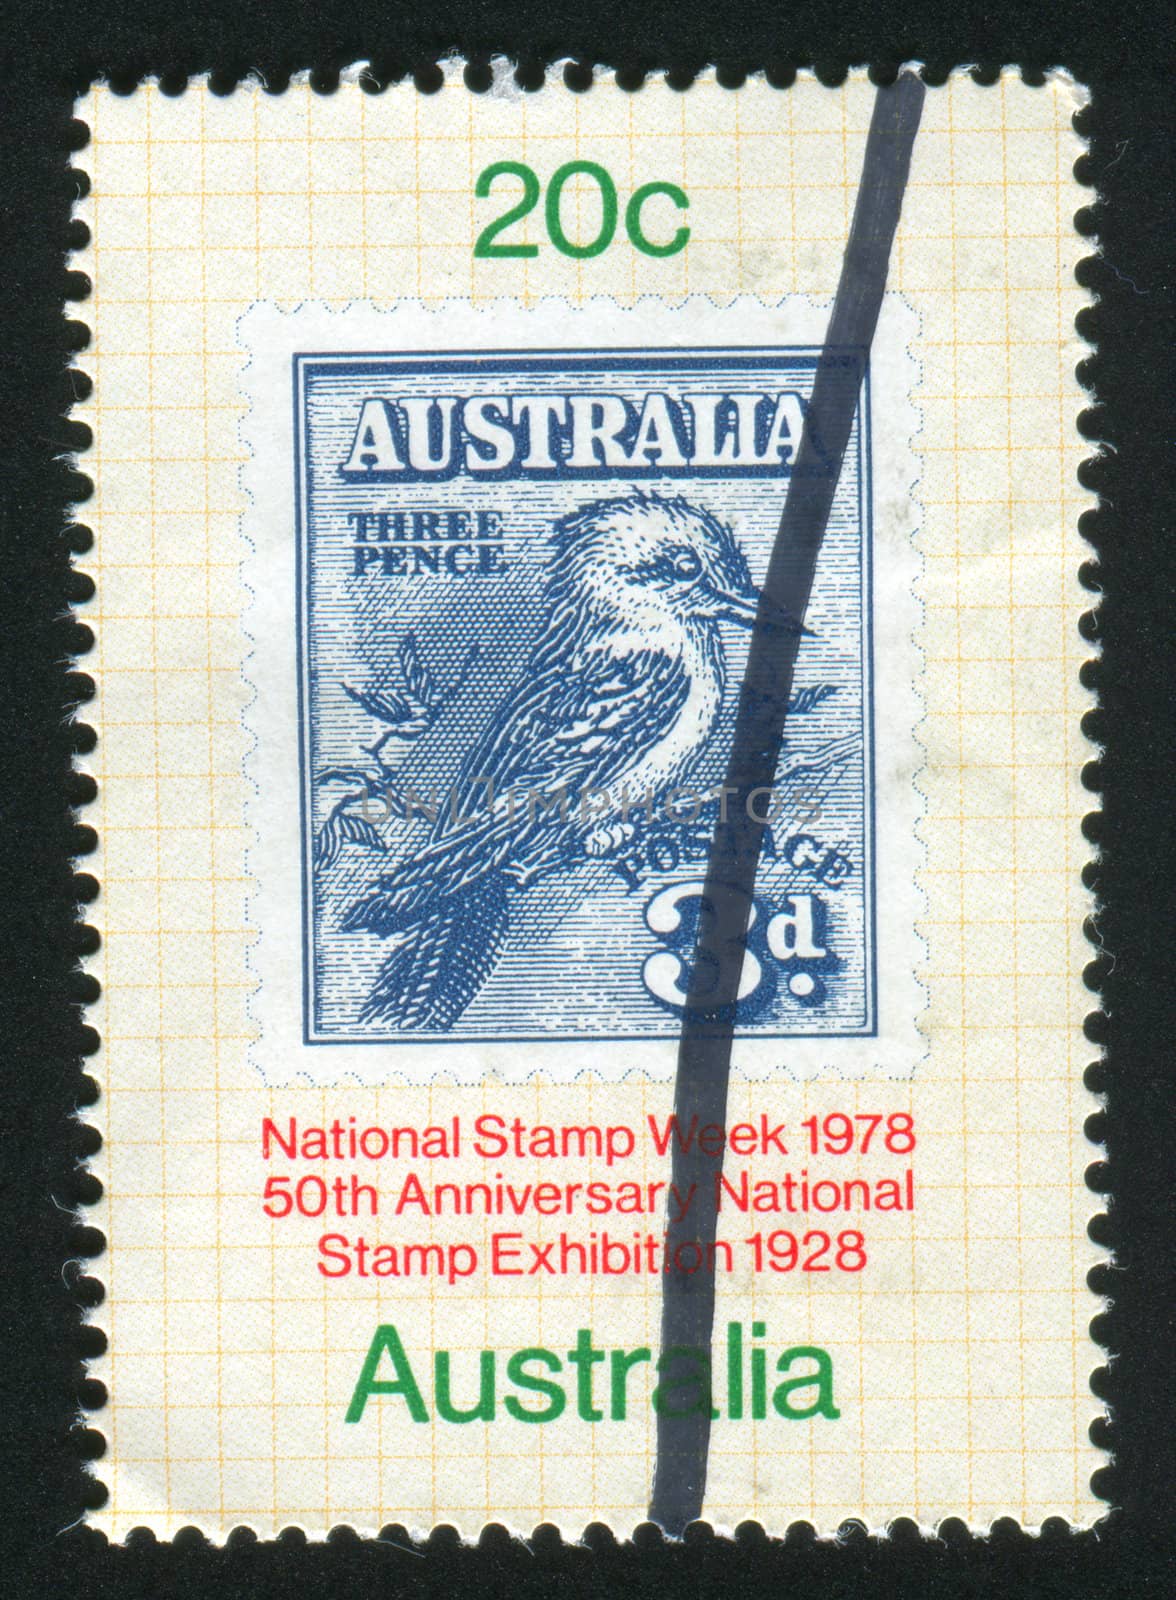 AUSTRALIA - CIRCA 1978: stamp printed by Australia, shows bird, circa 1978